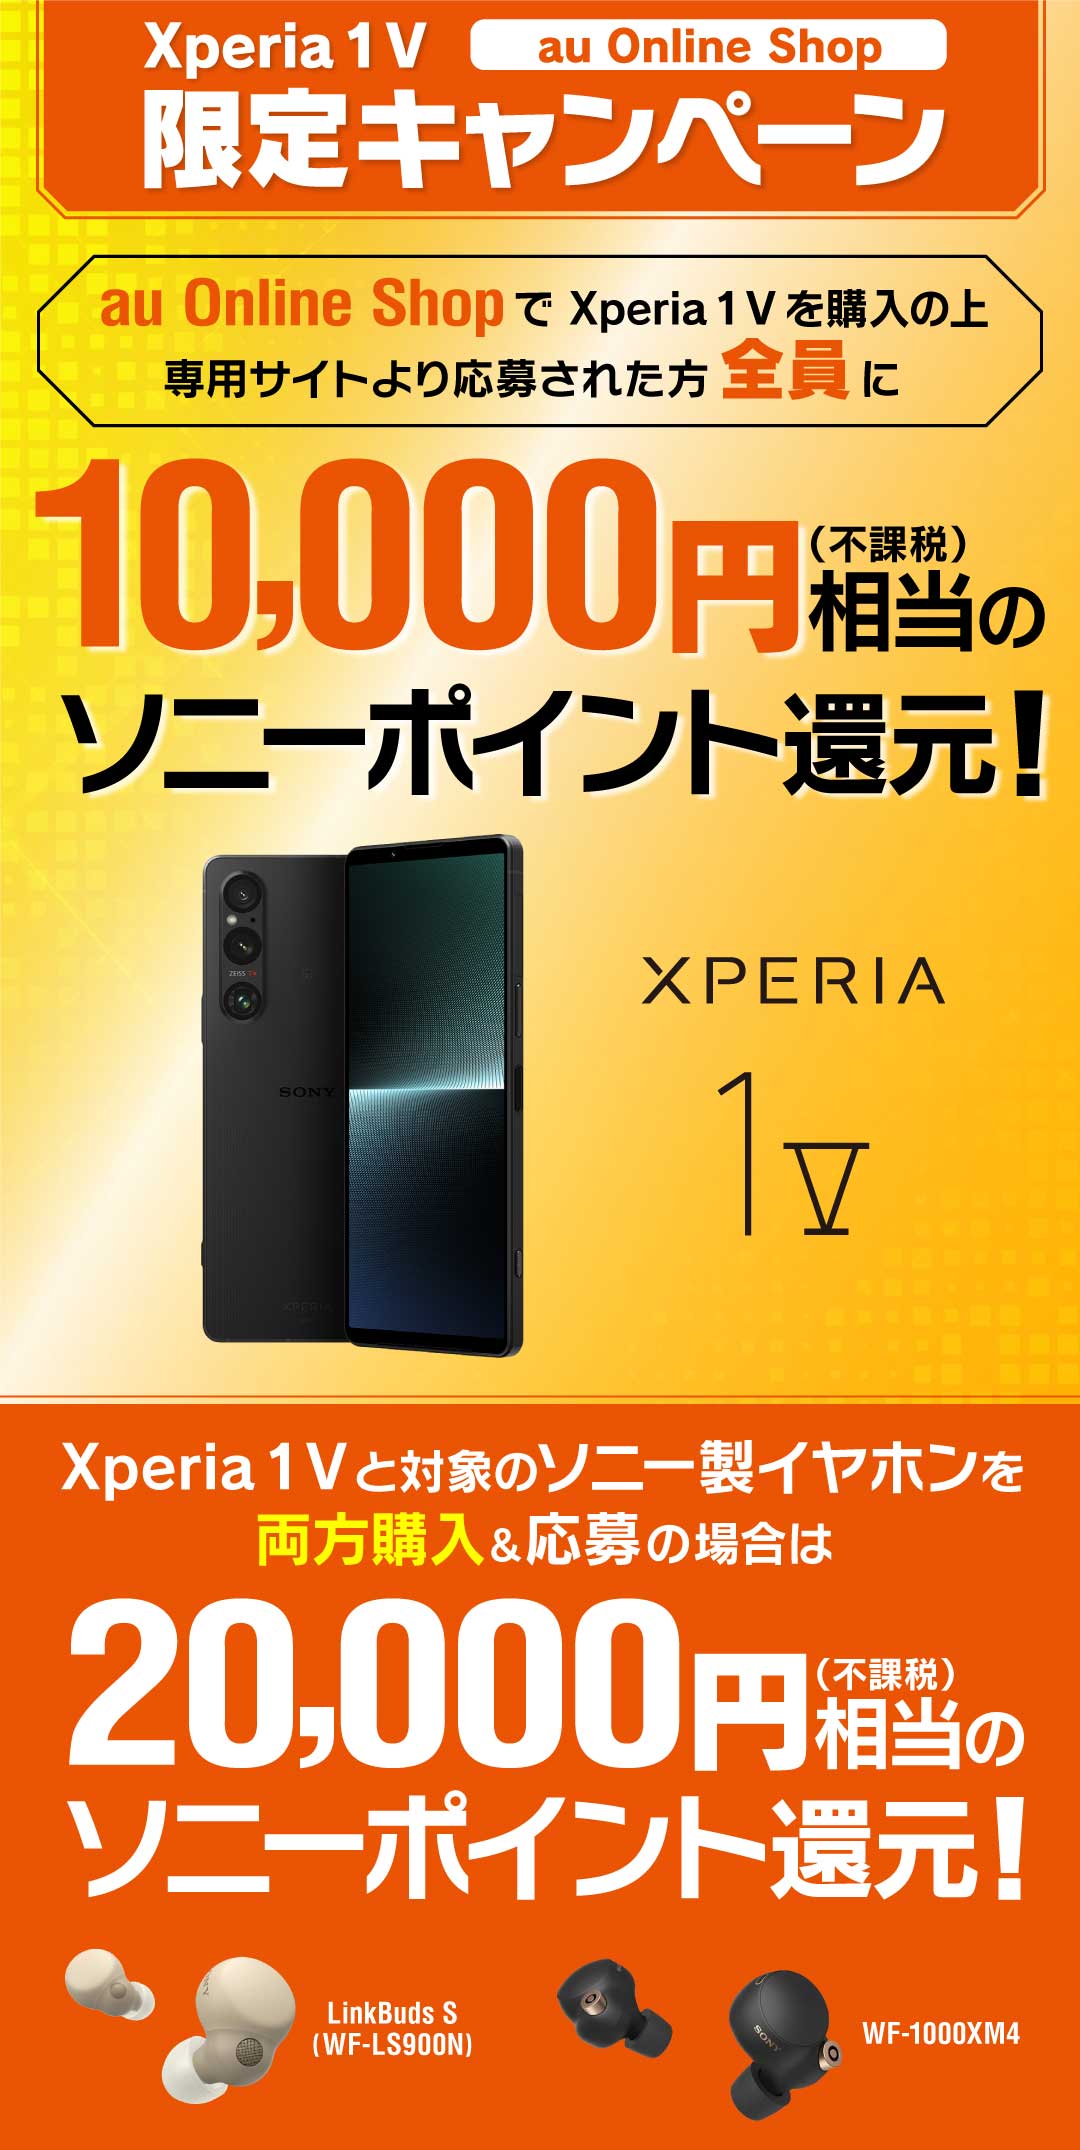 Xperia 1 V au Online Shop 限定キャンペーン au Online Shopで Xperia 1 V を購入の上、専用サイトより応募された方全員に※ 20,000円(不課税)相当のソニーポイント還元！ ※別途キャンペーンサイトへアクセスの上ご応募が必要です。